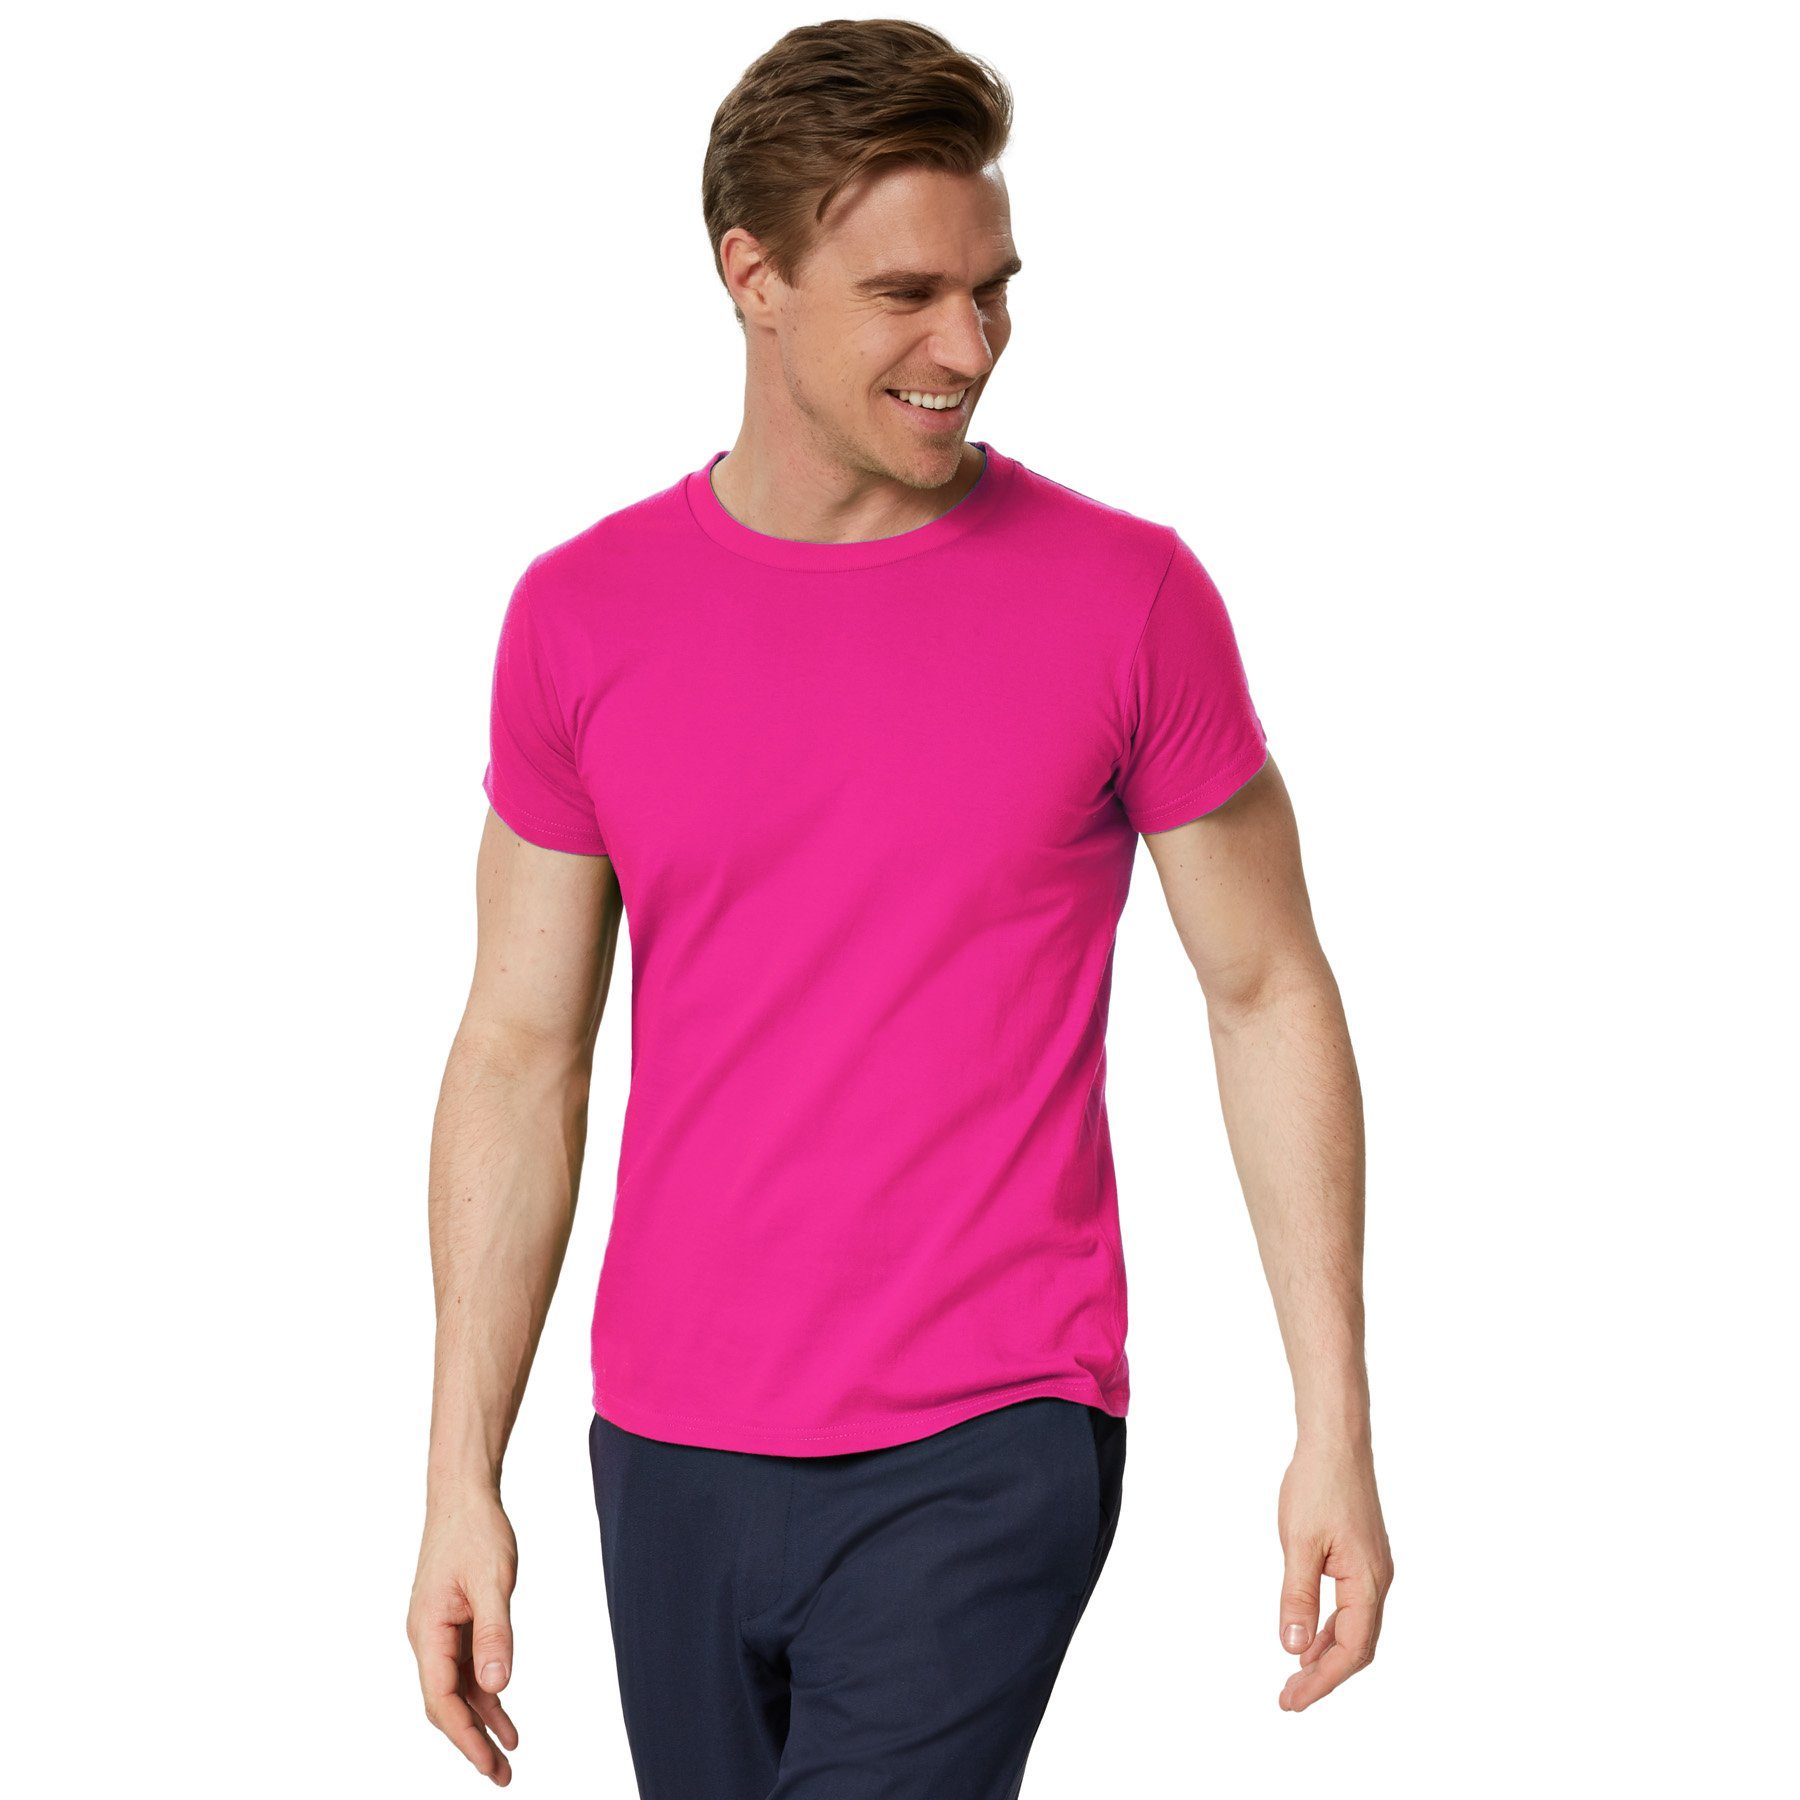 dressforfun T-Shirt T-Shirt Männer Rundhals pink